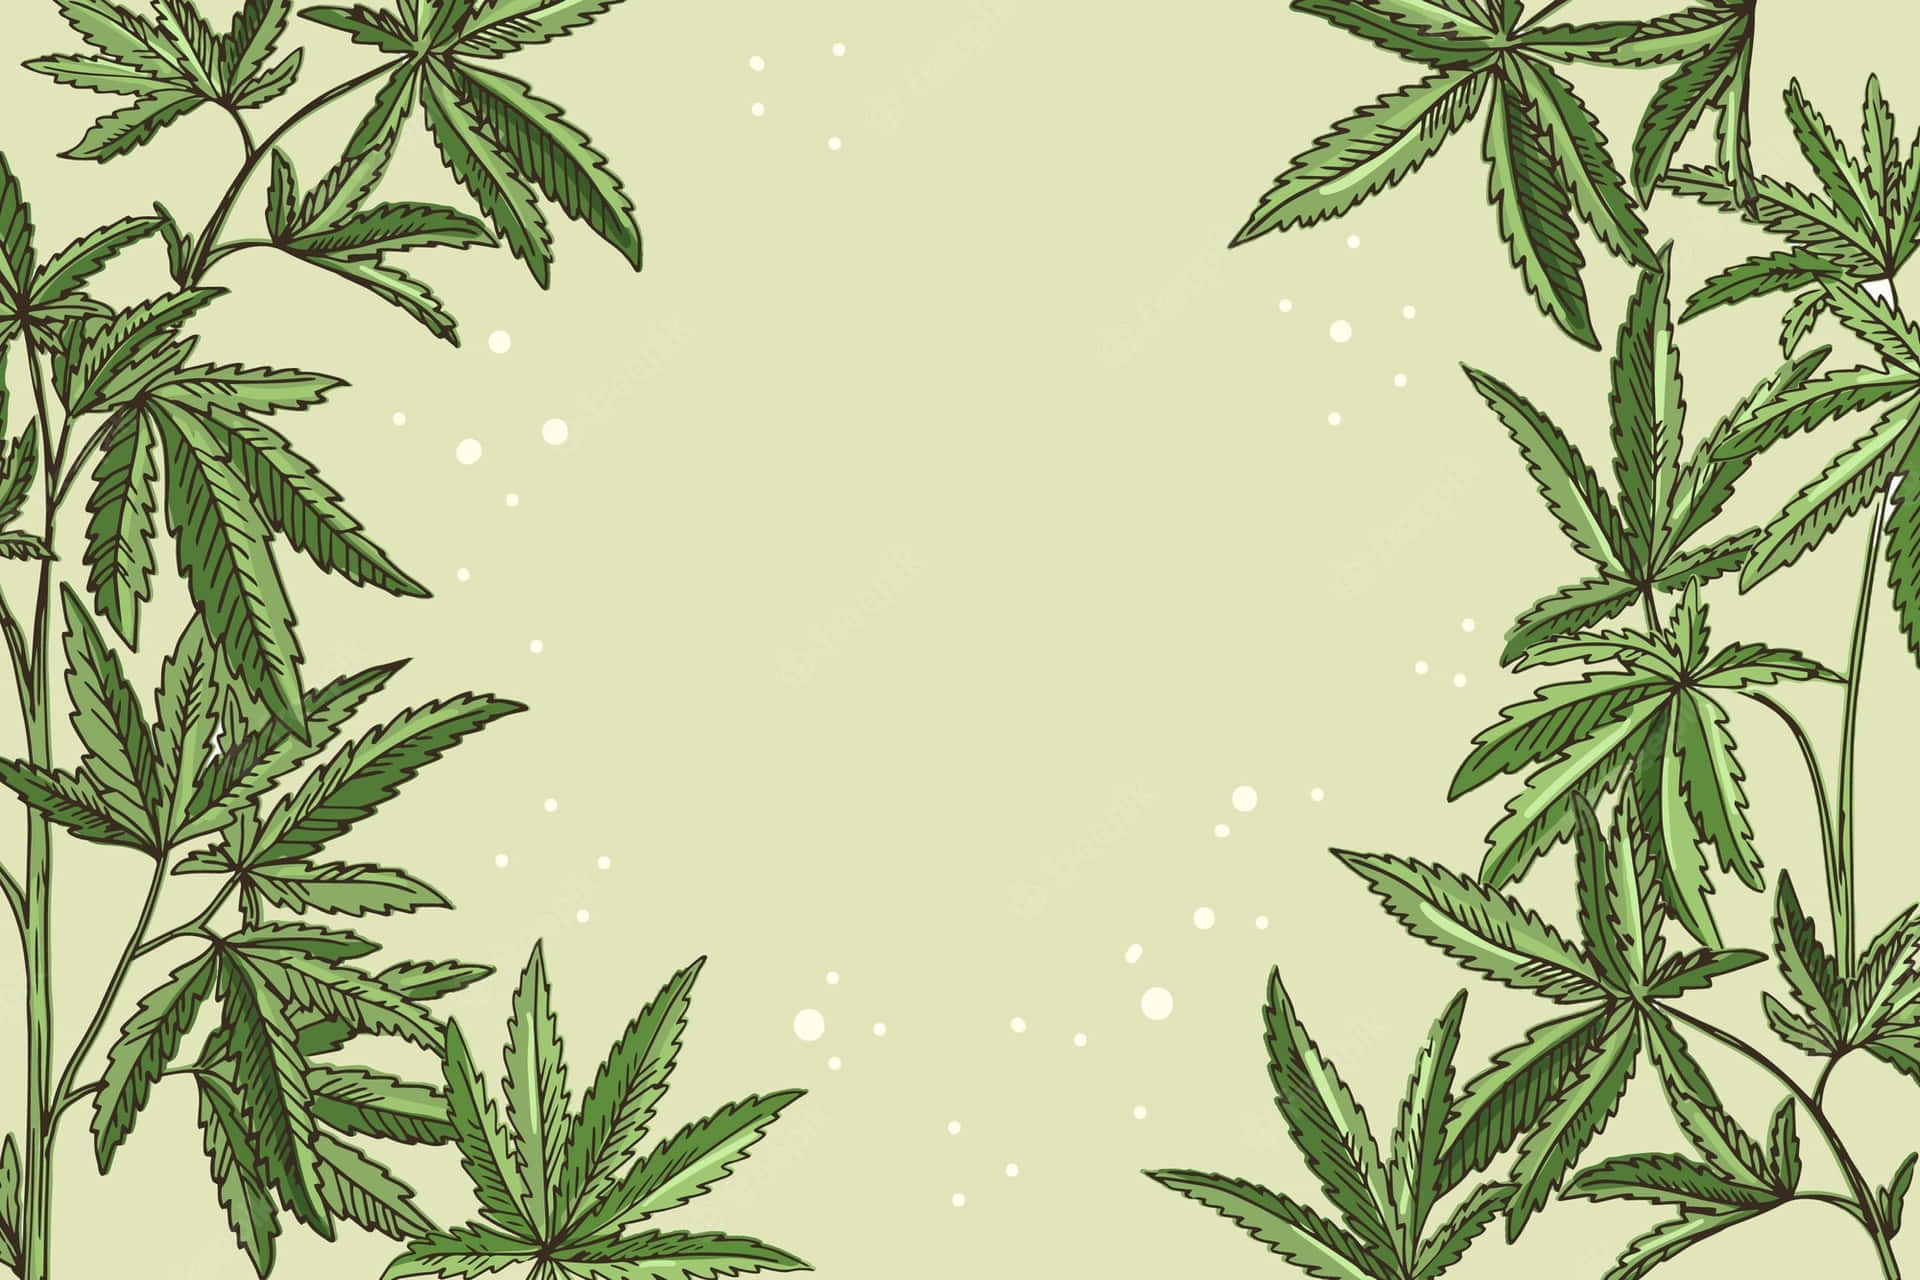 Illustration Art Of Marijuana Leaves Background